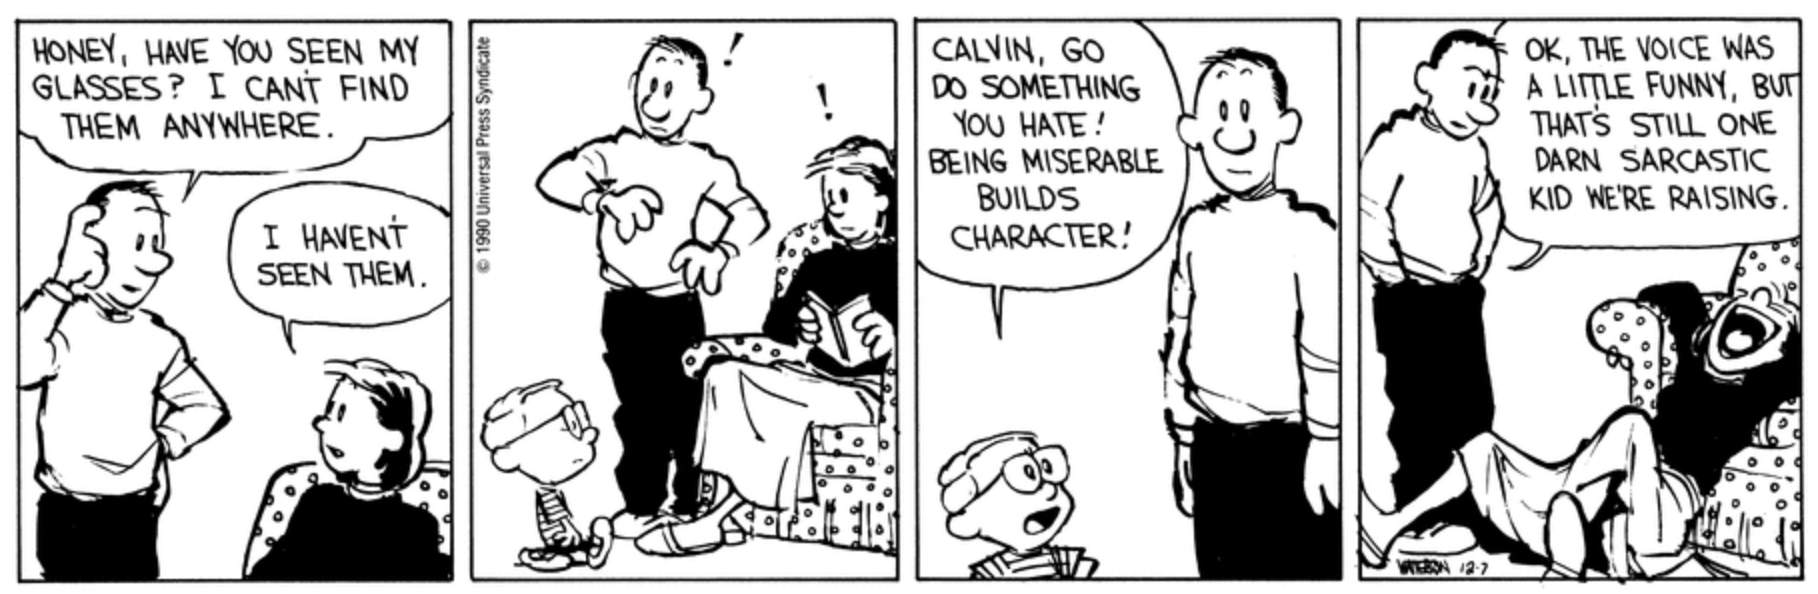 10 Funniest Calvin and Hobbes Comics, According To Reddit